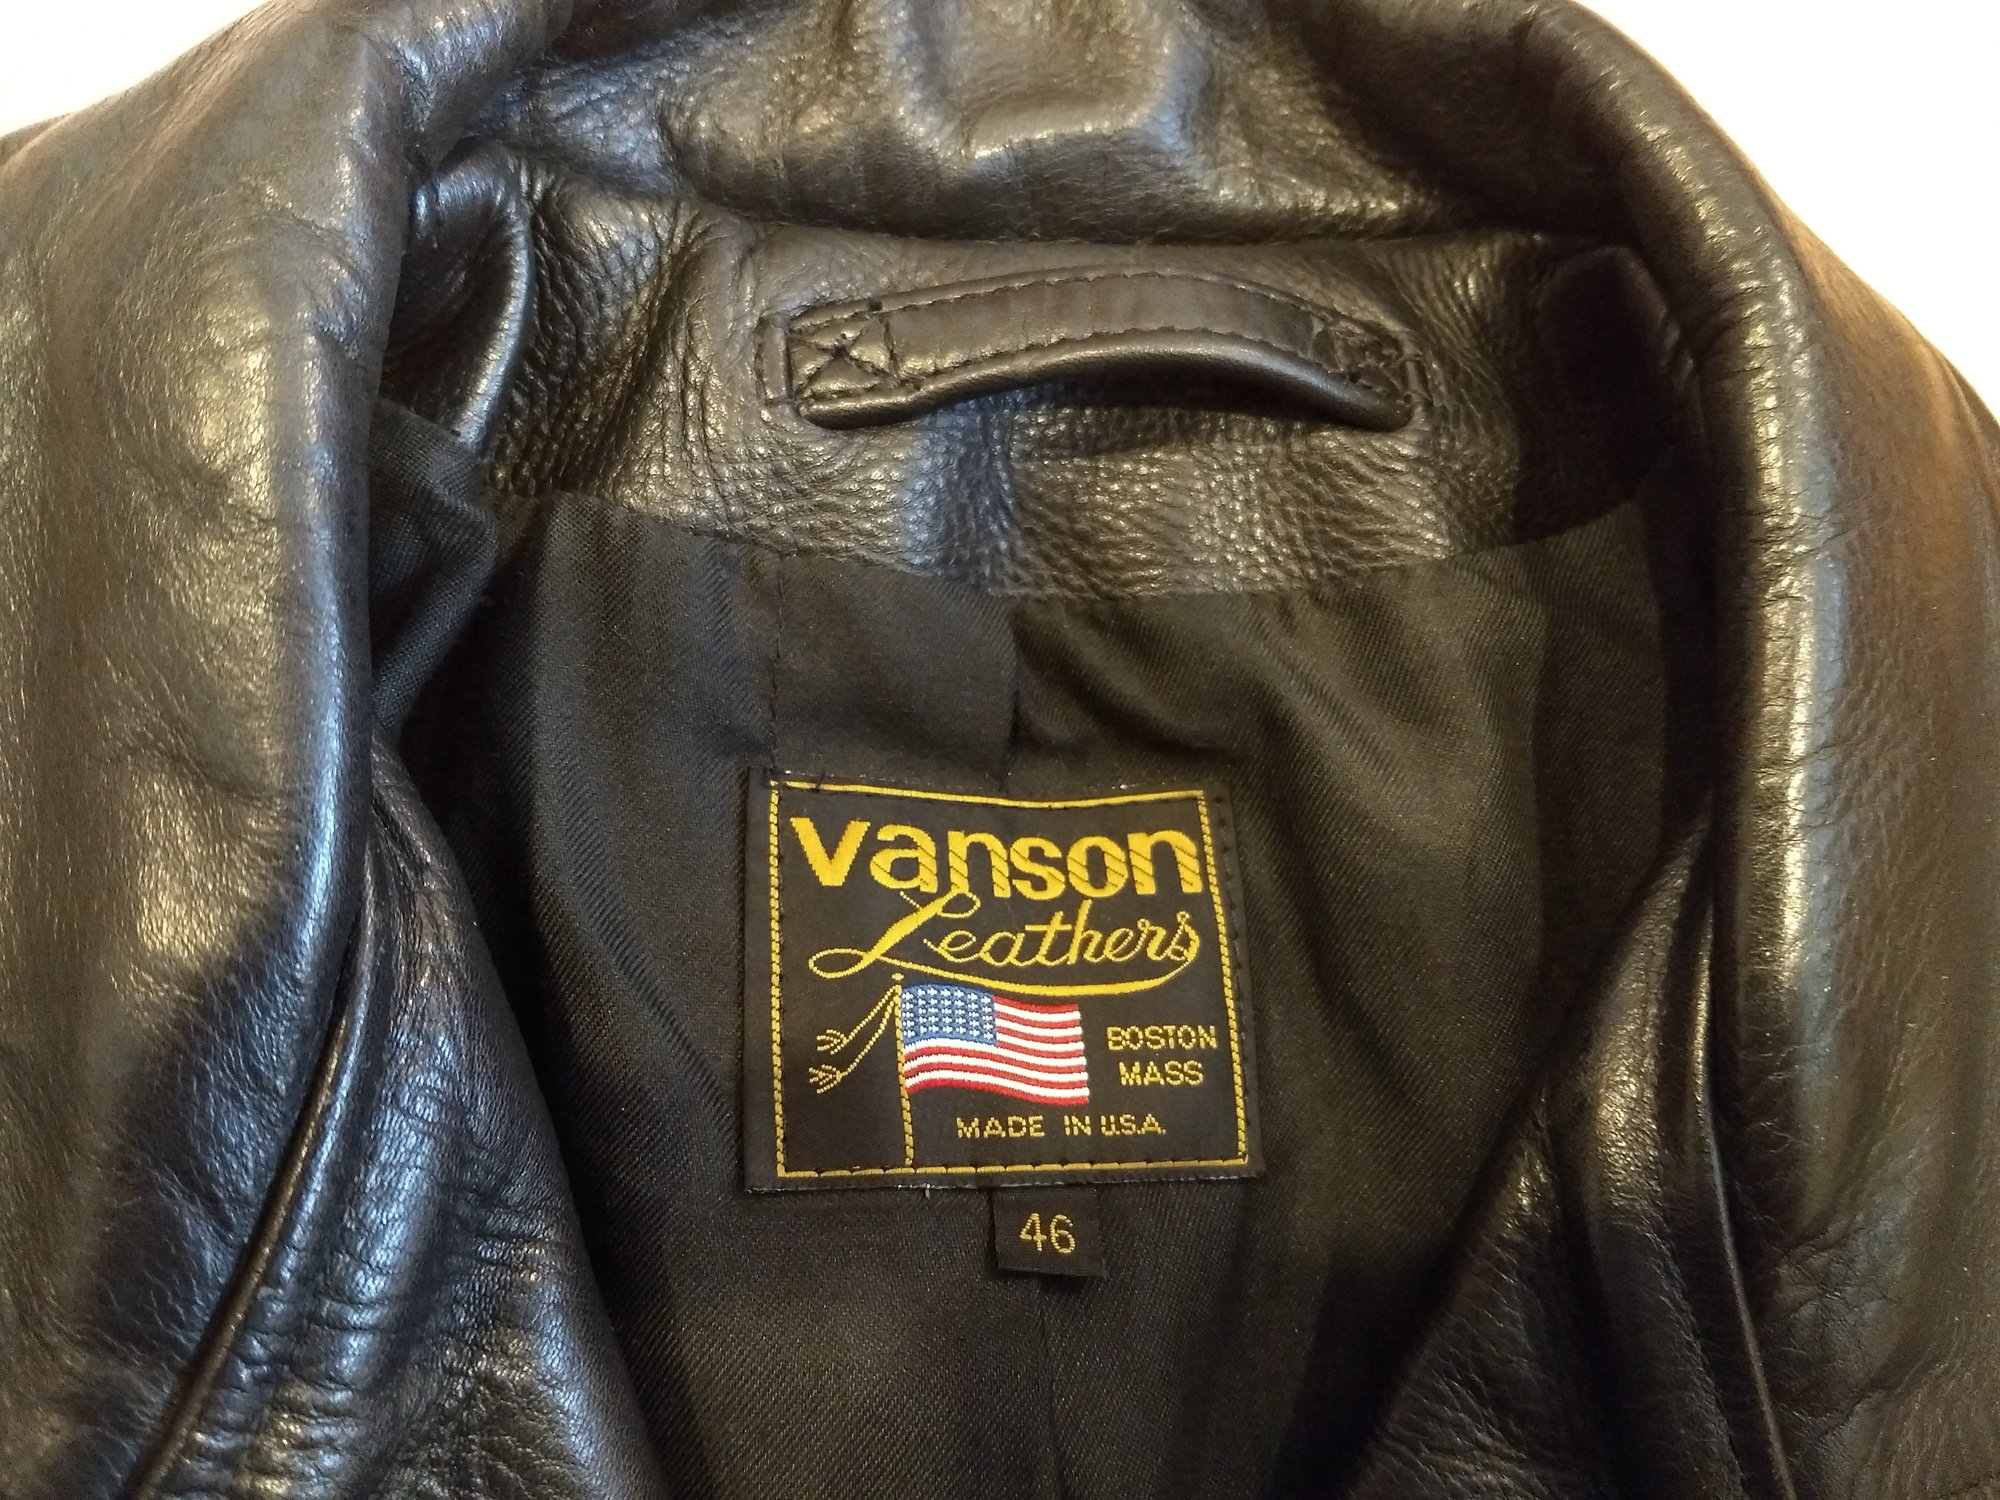 Vanson Leathers Raider Leather Jacket 46 (L/XL) - Harley Davidson Forums